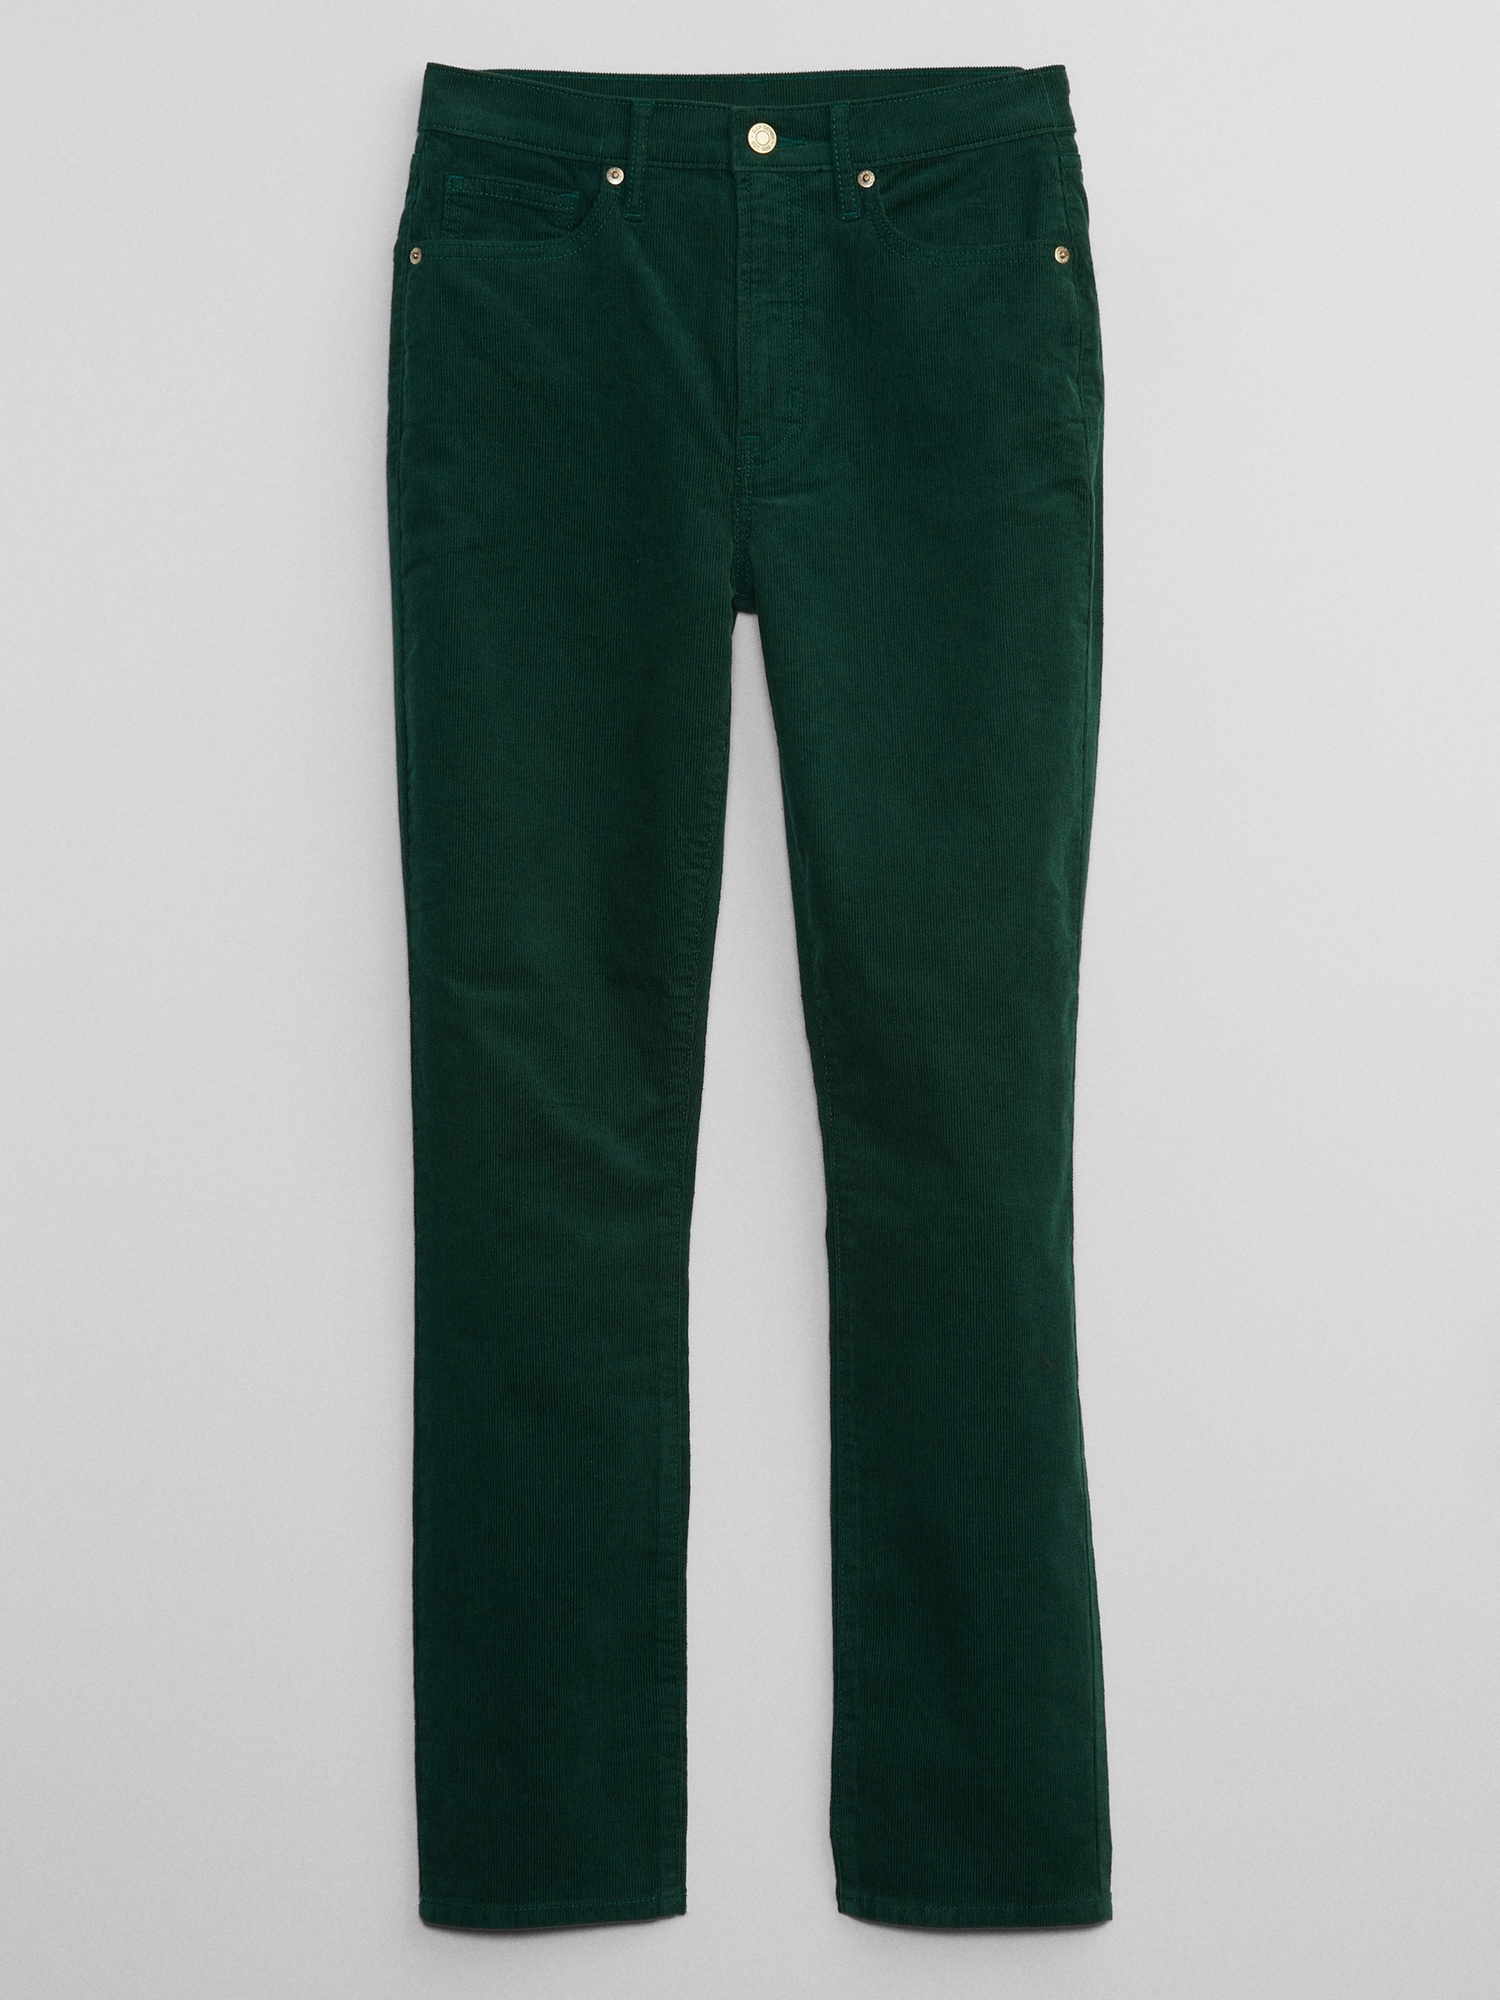 Classic Corduroy Pants - Bright Green | J. PRESS